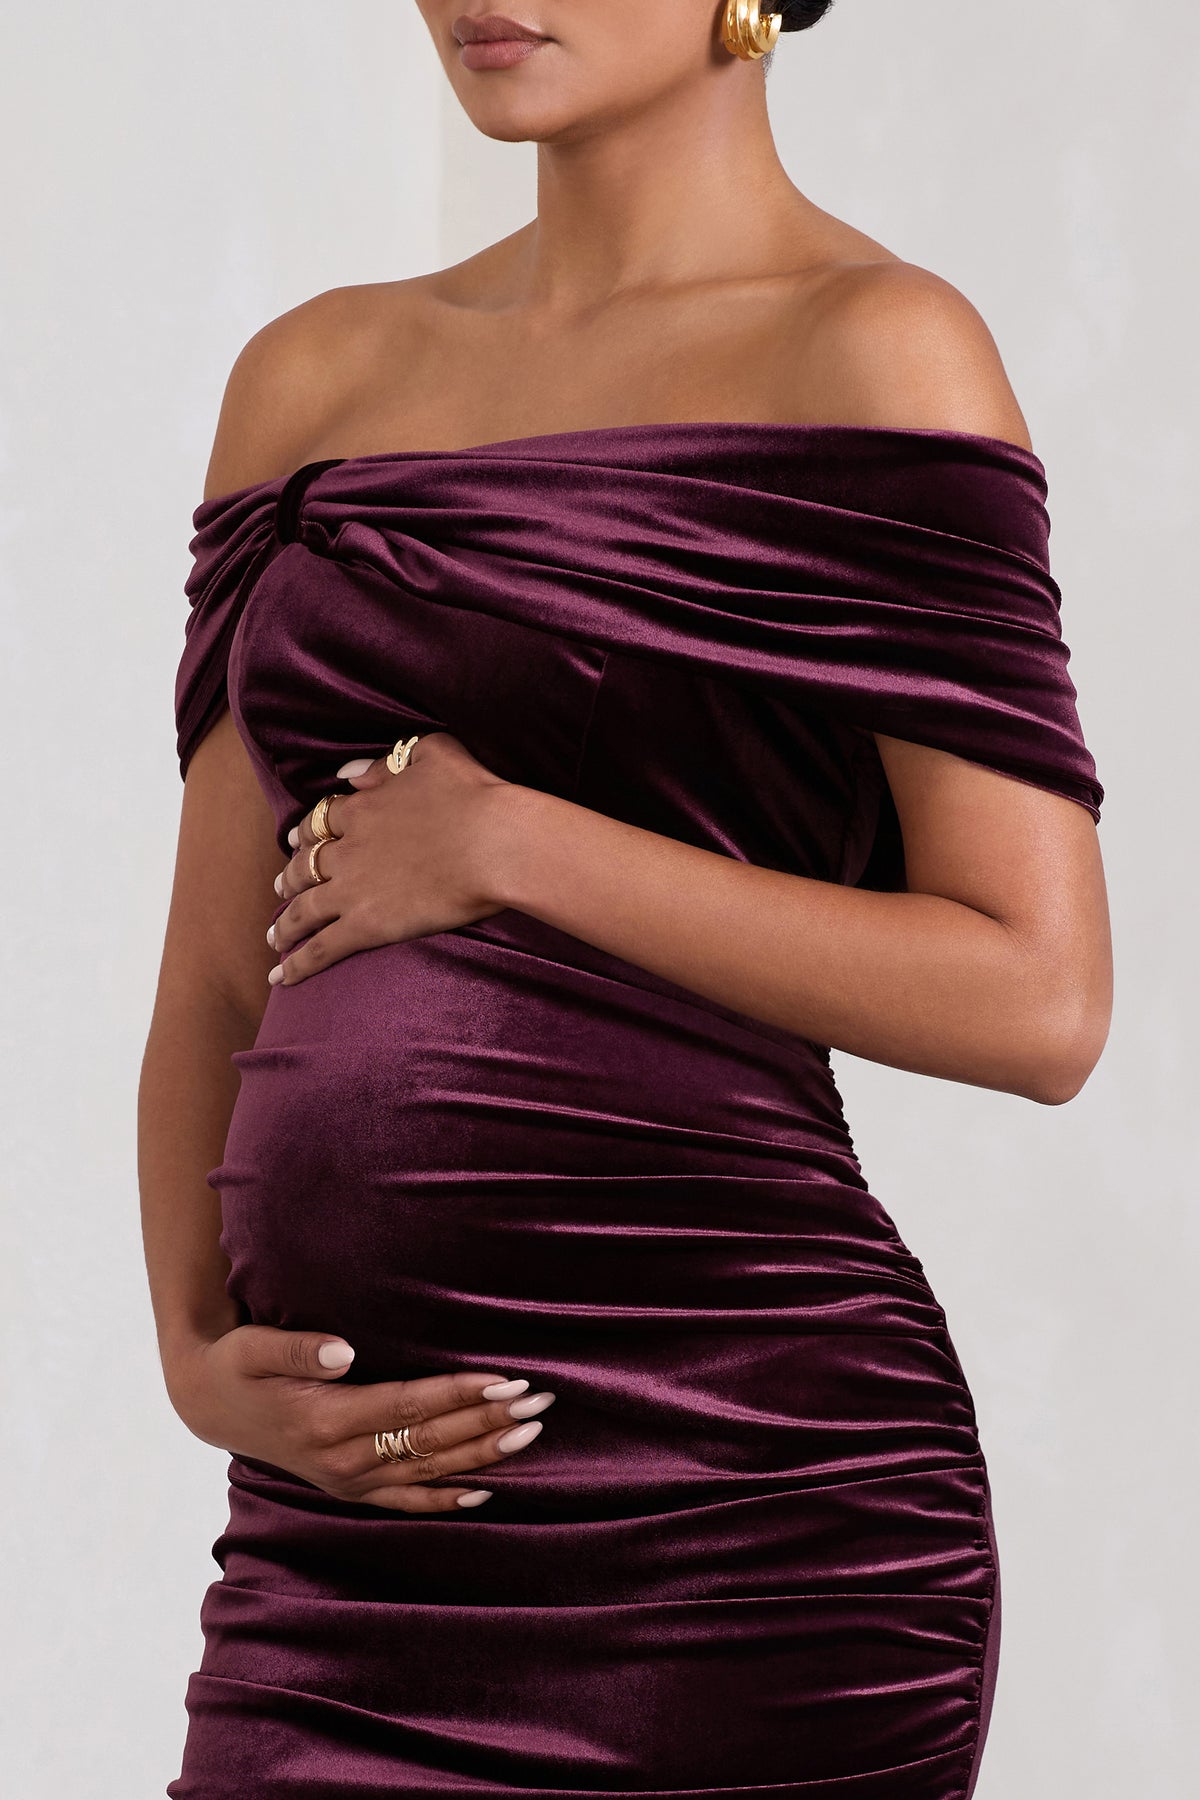 Boohoo Maternity wine (purple red) velvet, off shoulder dress uk 14 size